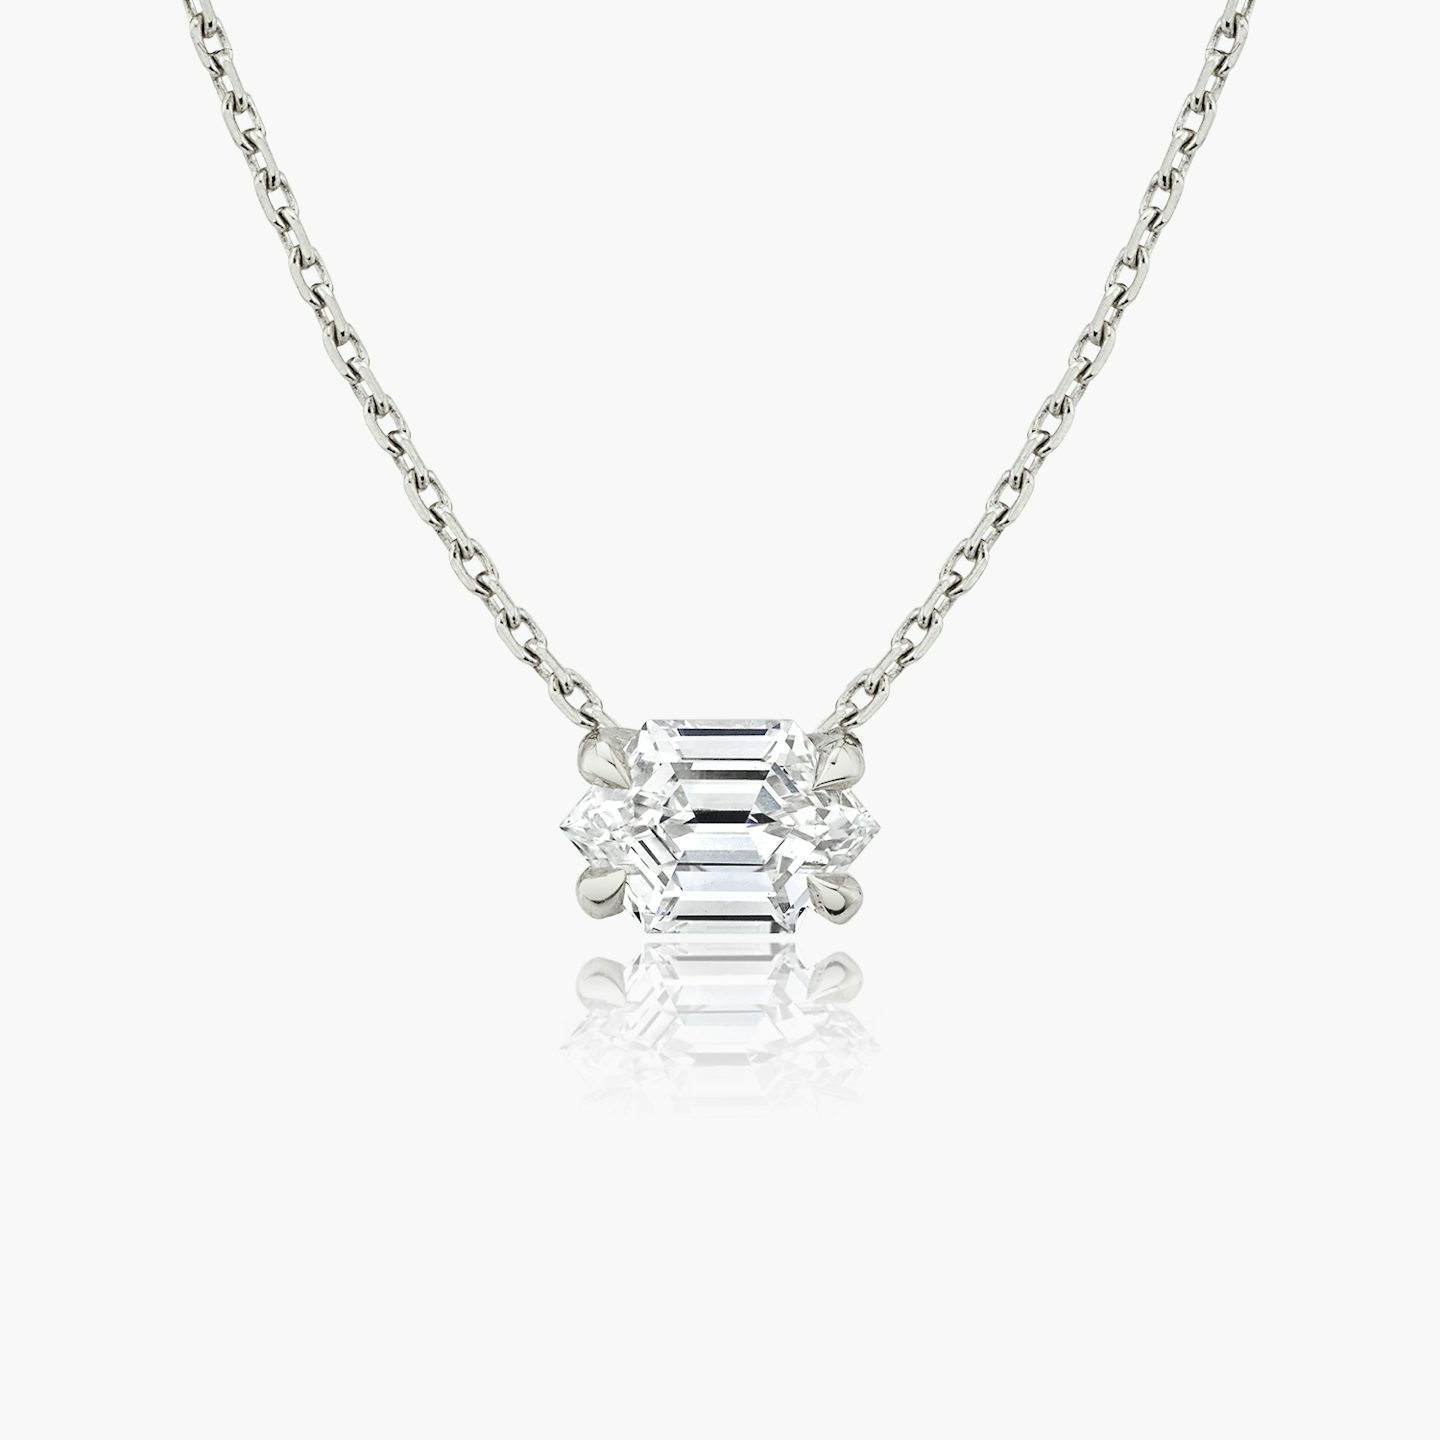 Collier VRAI Iconic | longHexagon | 14k | Or blanc 18 carats | Poids en carats: 3/4